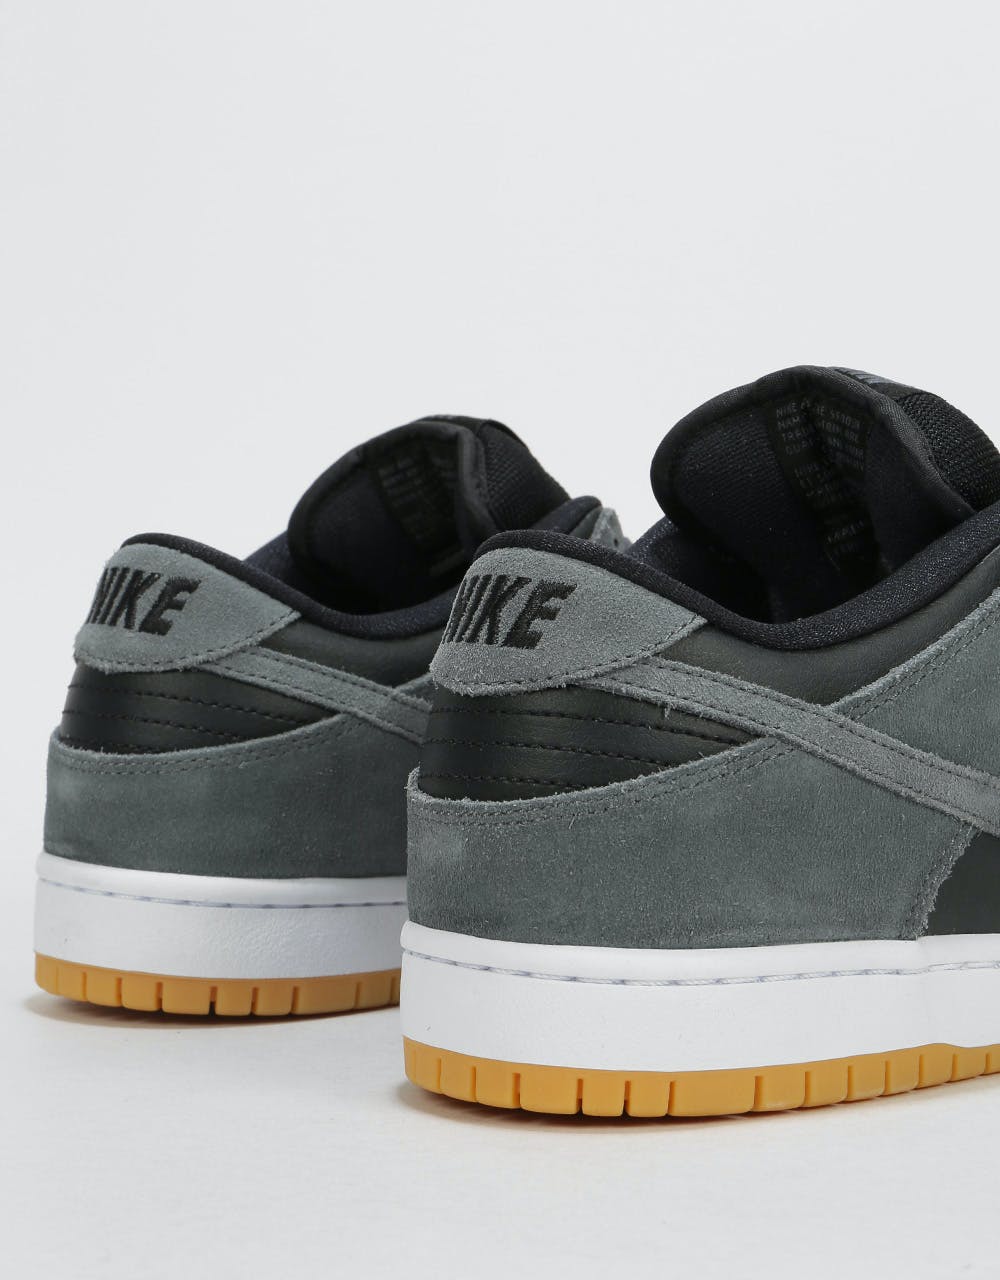 Nike SB Dunk Low Skate Shoes - Dark Grey/Dark Grey-Black-White